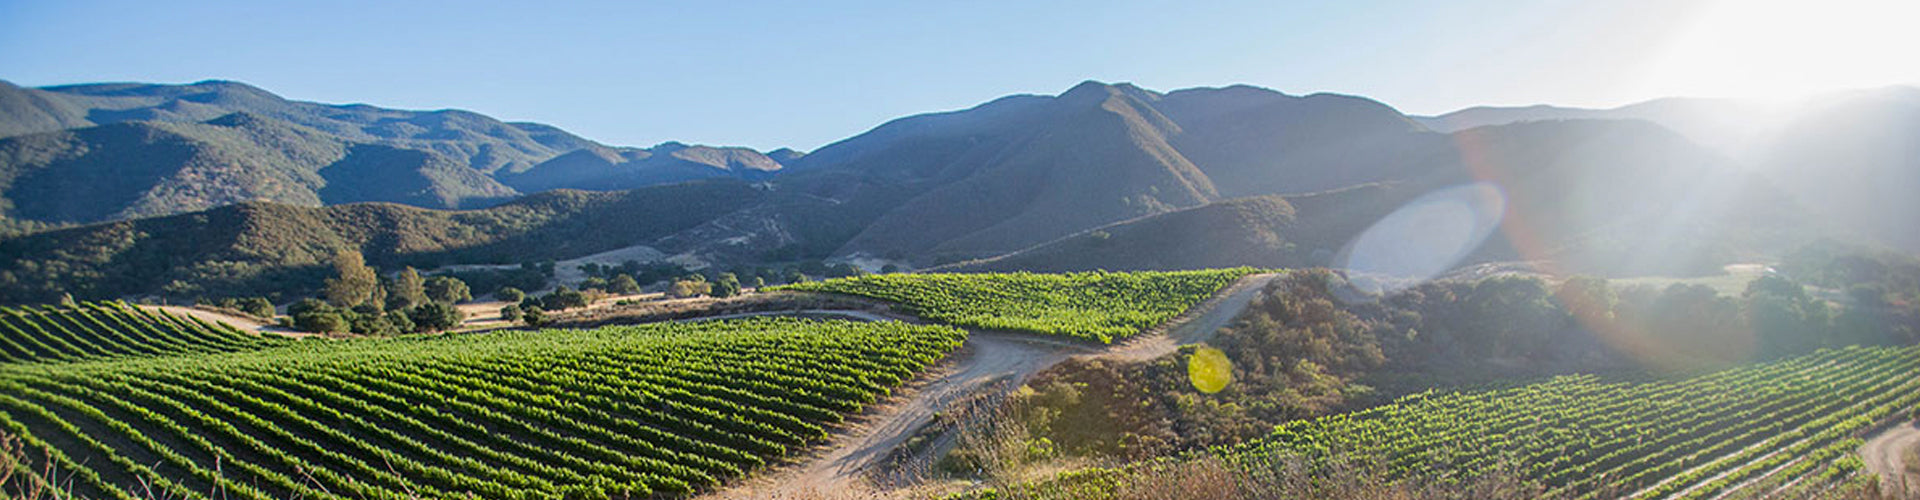 Pisoni Vineyards in Monterey County's Santa Lucia Highlands